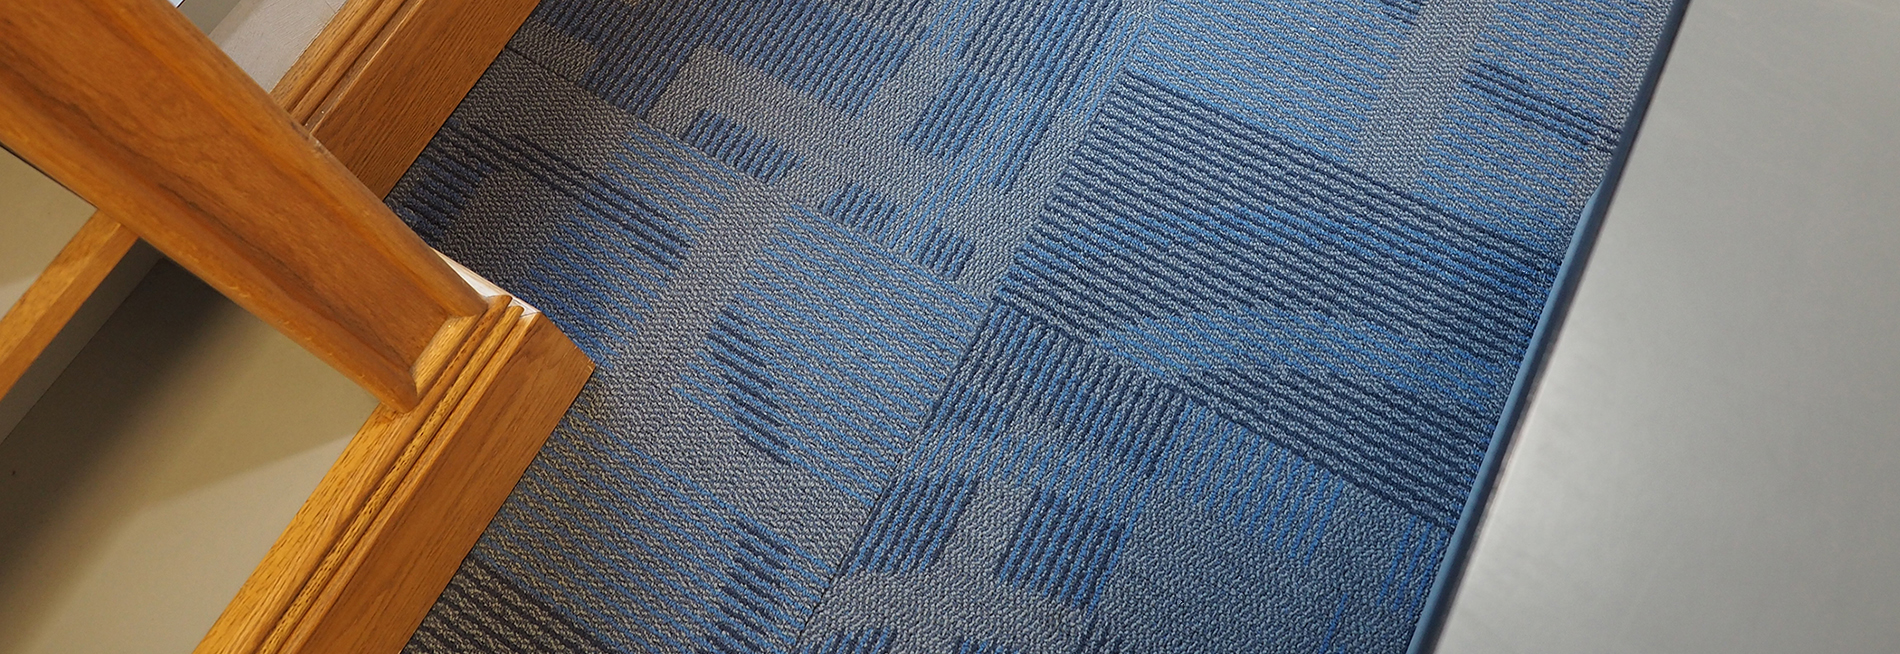 Example of Mannington Carpet Tile in School